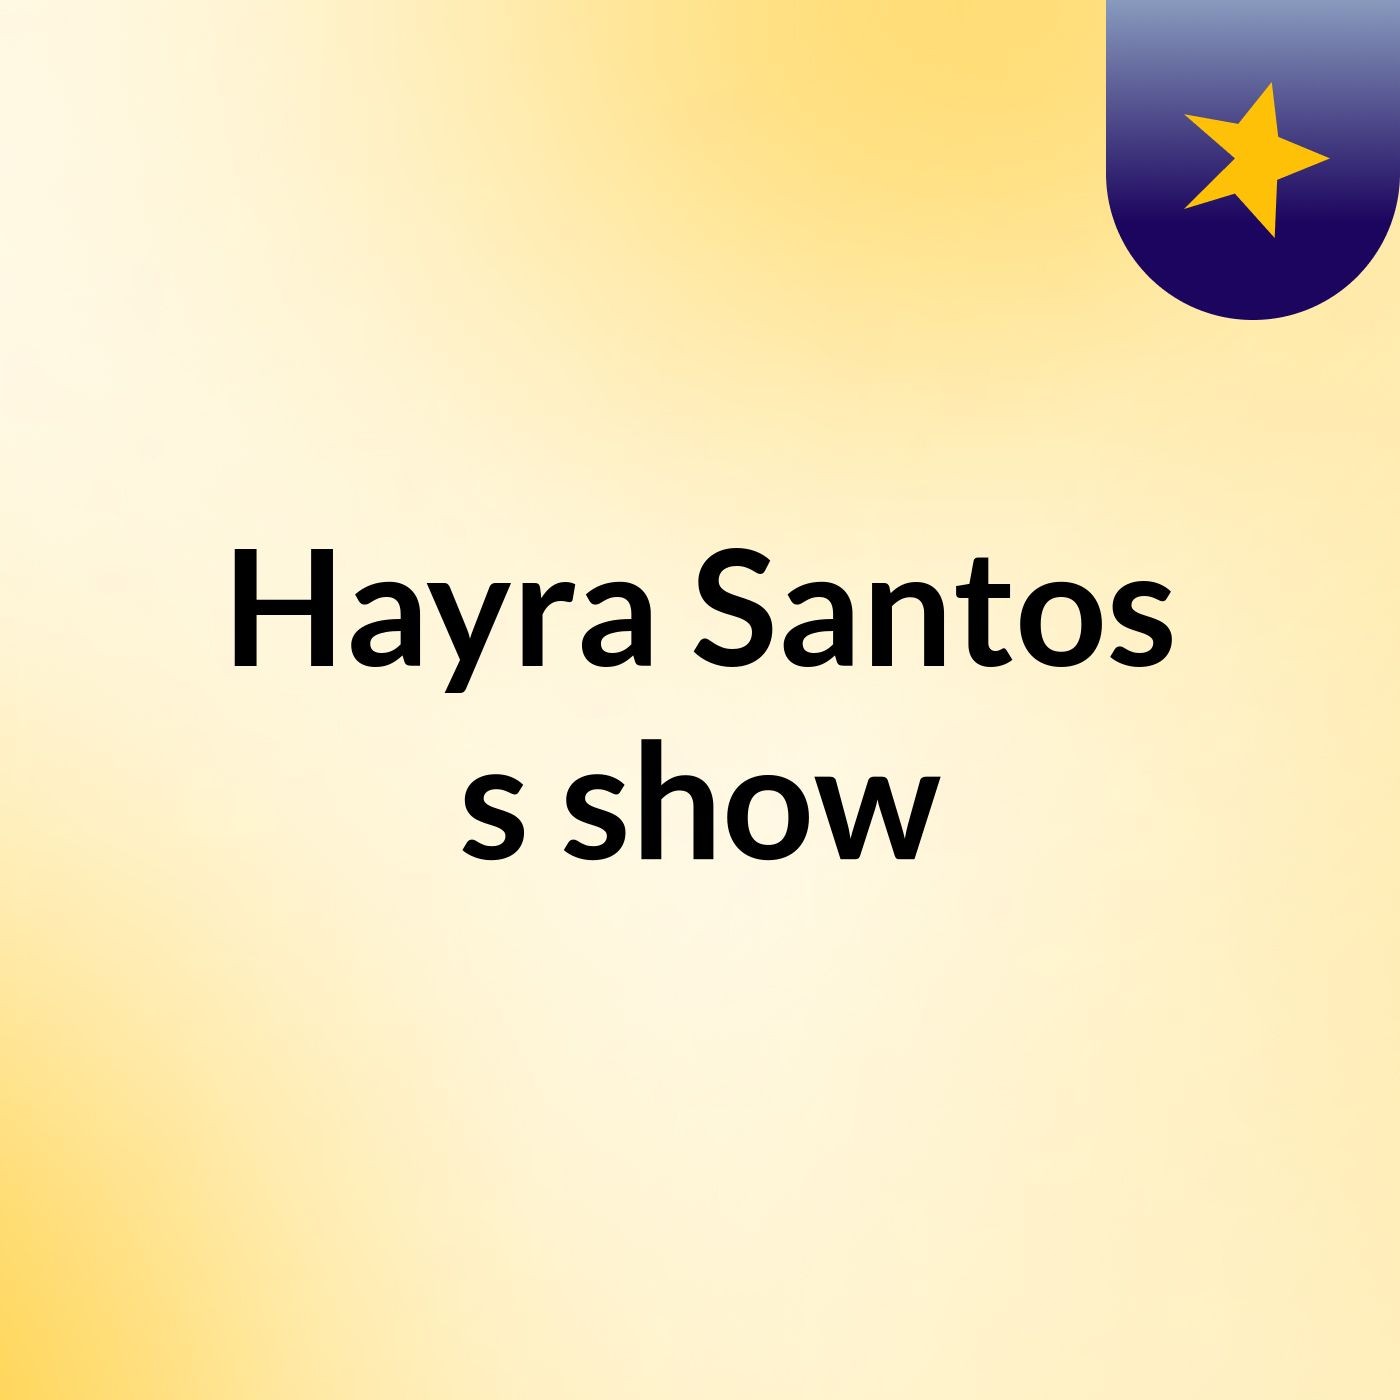 Hayra Santos's show